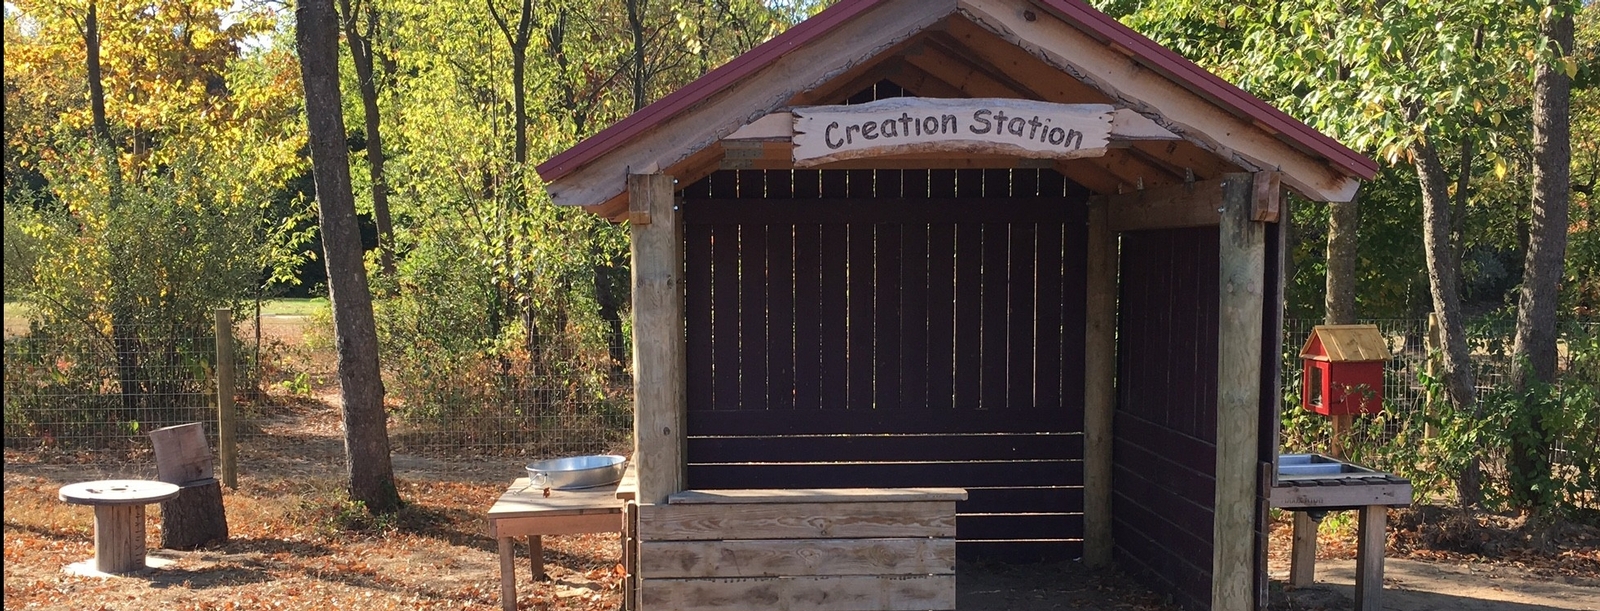 Creation station